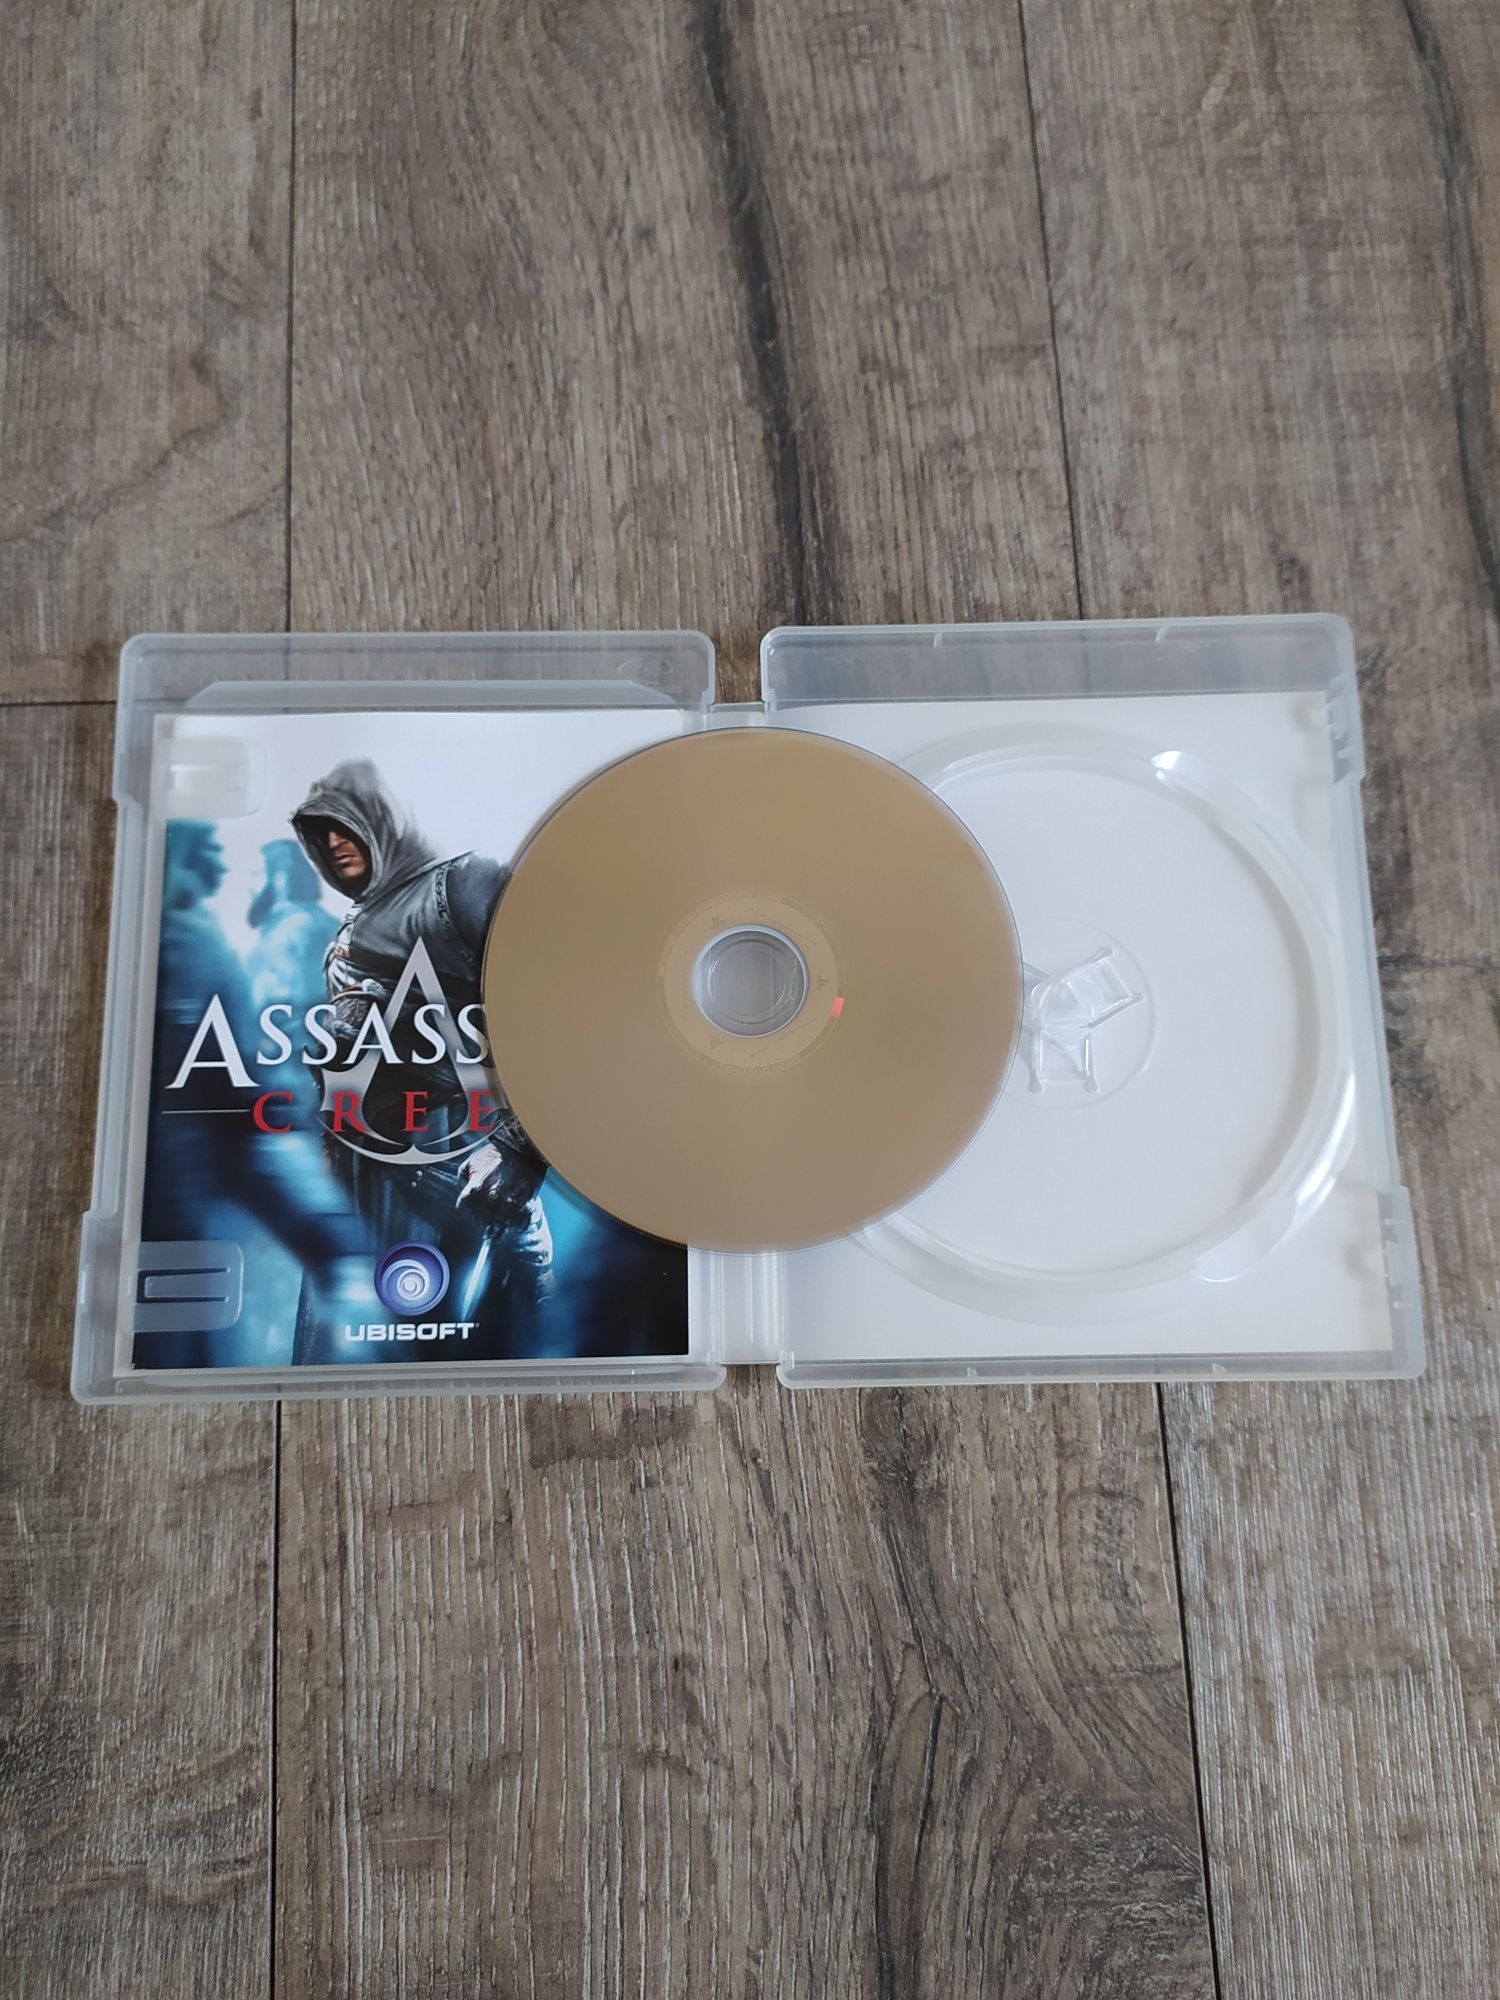 Gra PS3 Assassin's Creed Wysyłka w 24h